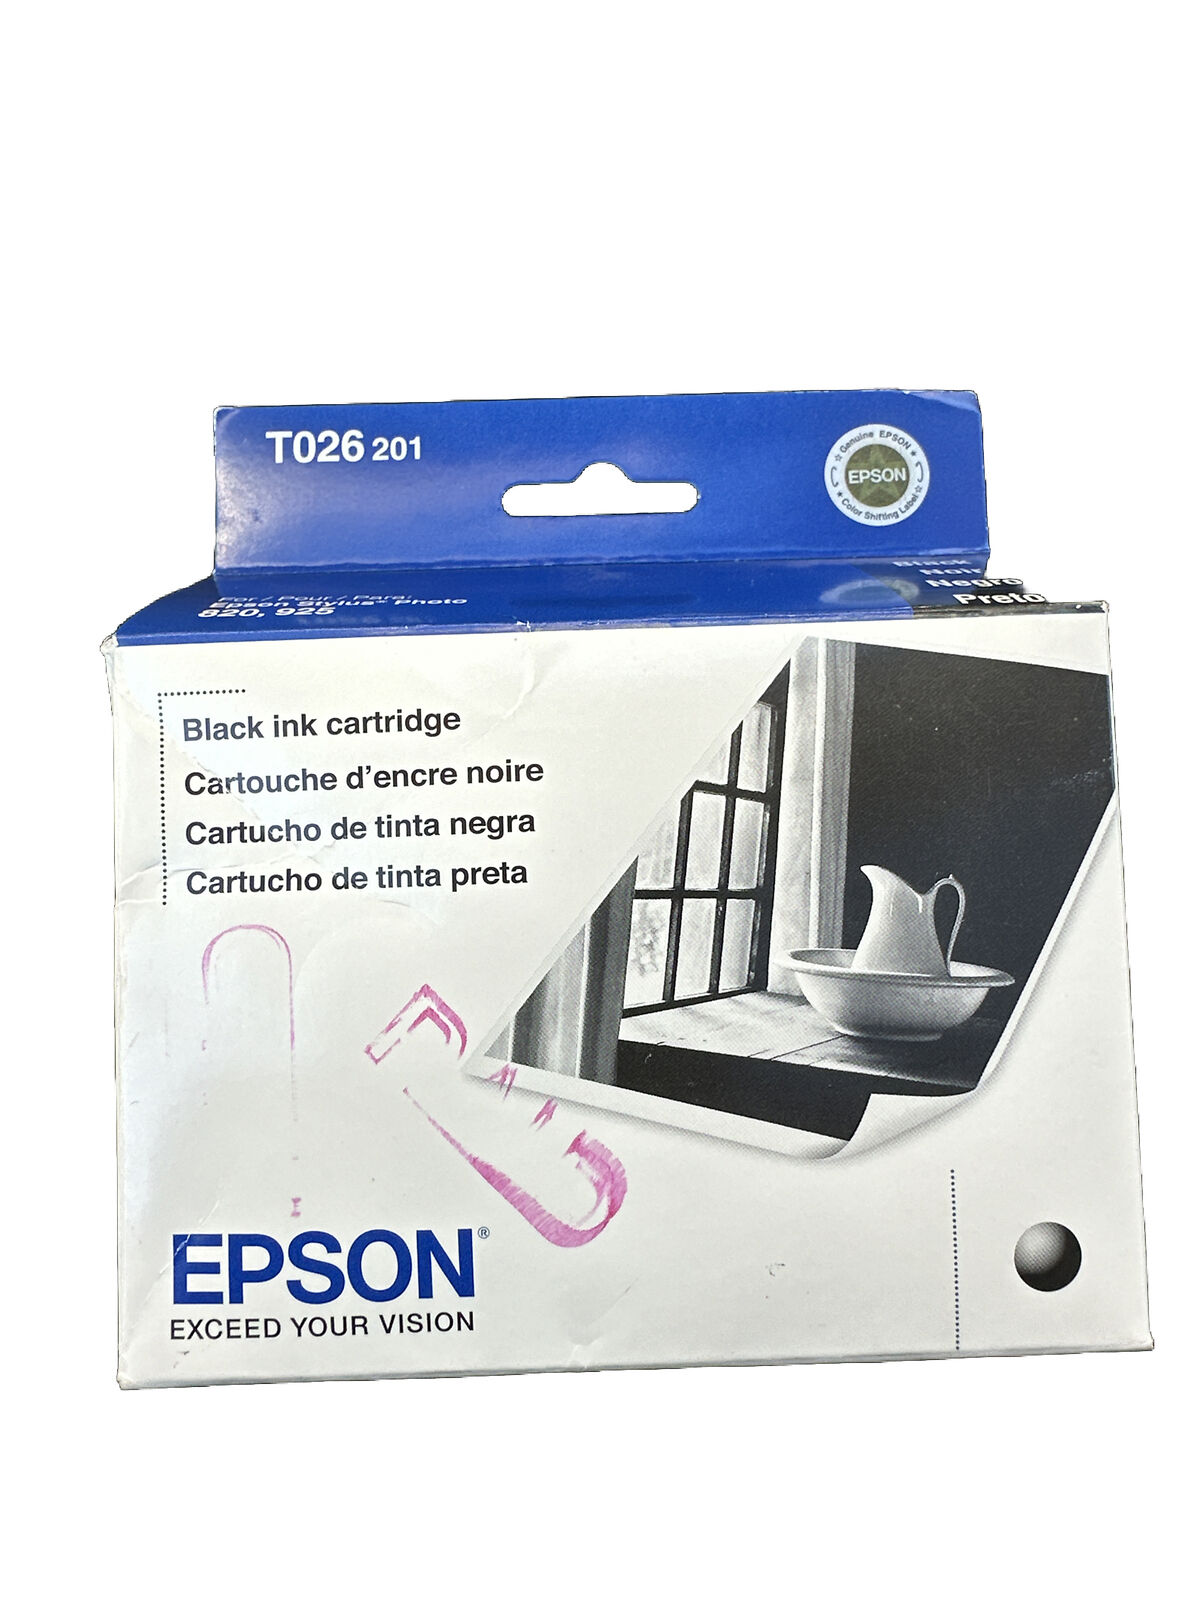 EPSON T026-201 820 / 925 Stylus Photo Black Genuine Ink Cartridge Exp 06/2011